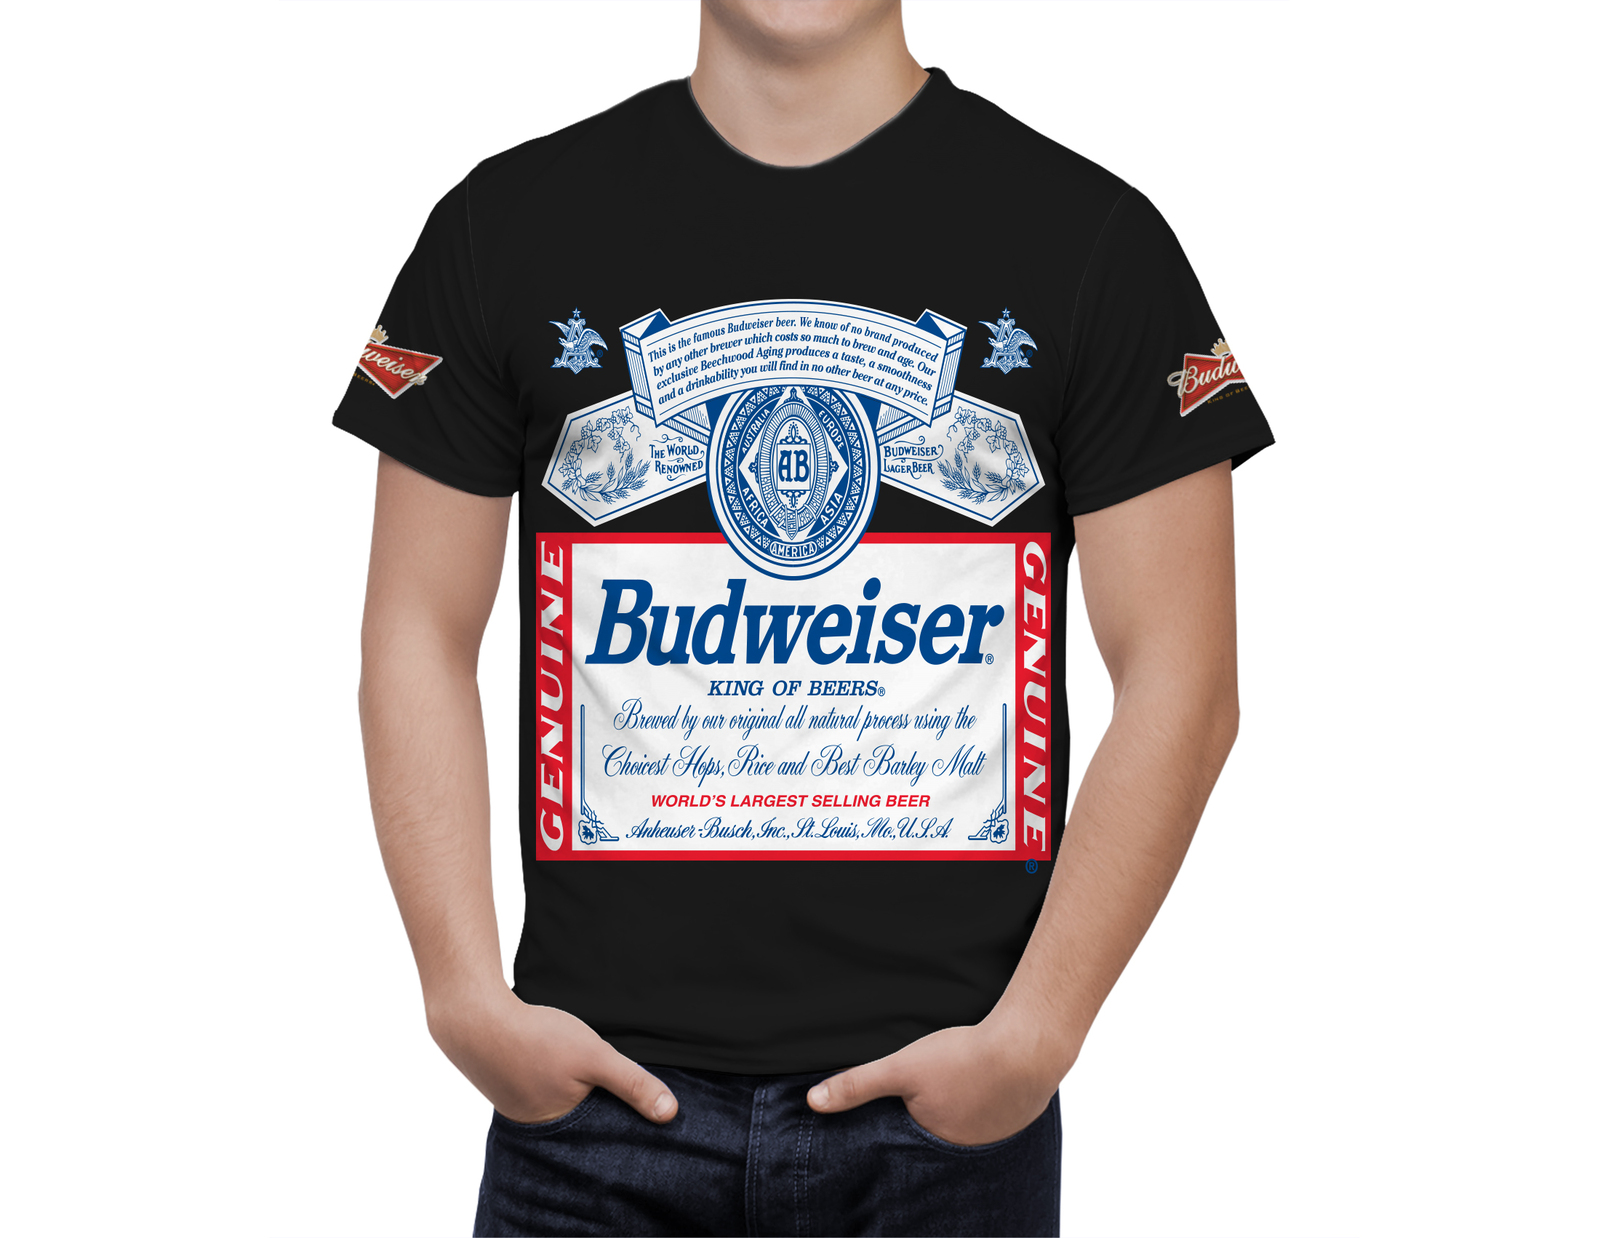 Budweiser  Black Beer Logo T-Shirt Gifts New Fashion Short Sleeve S-2 XL